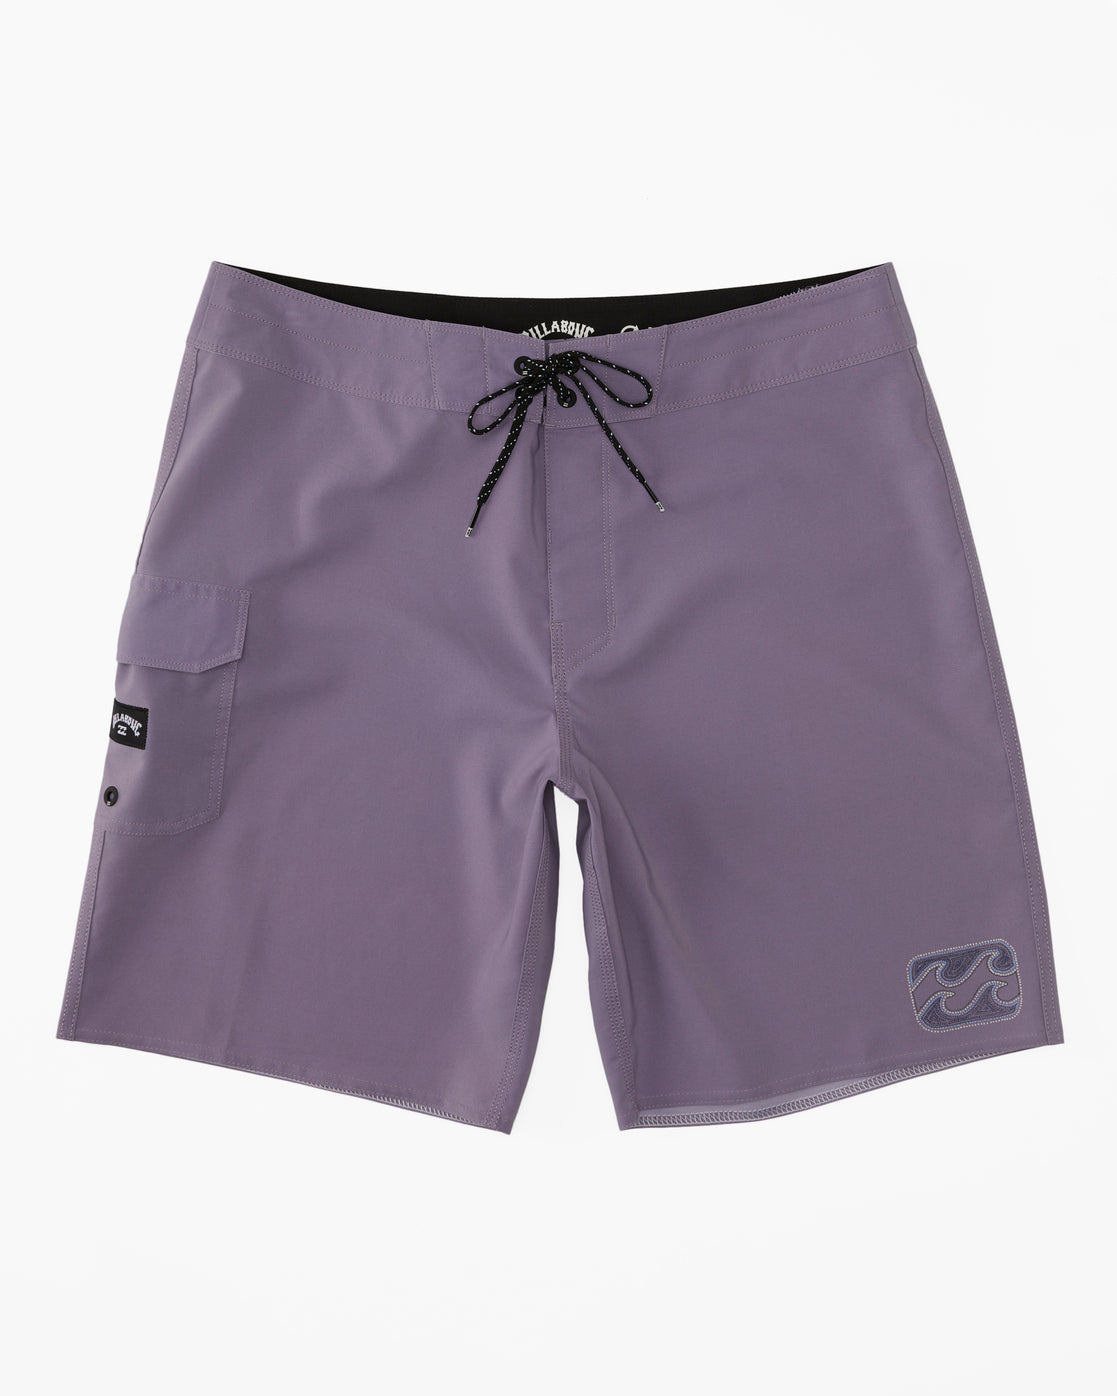 Arch Pro Boardshorts - Purple Haze